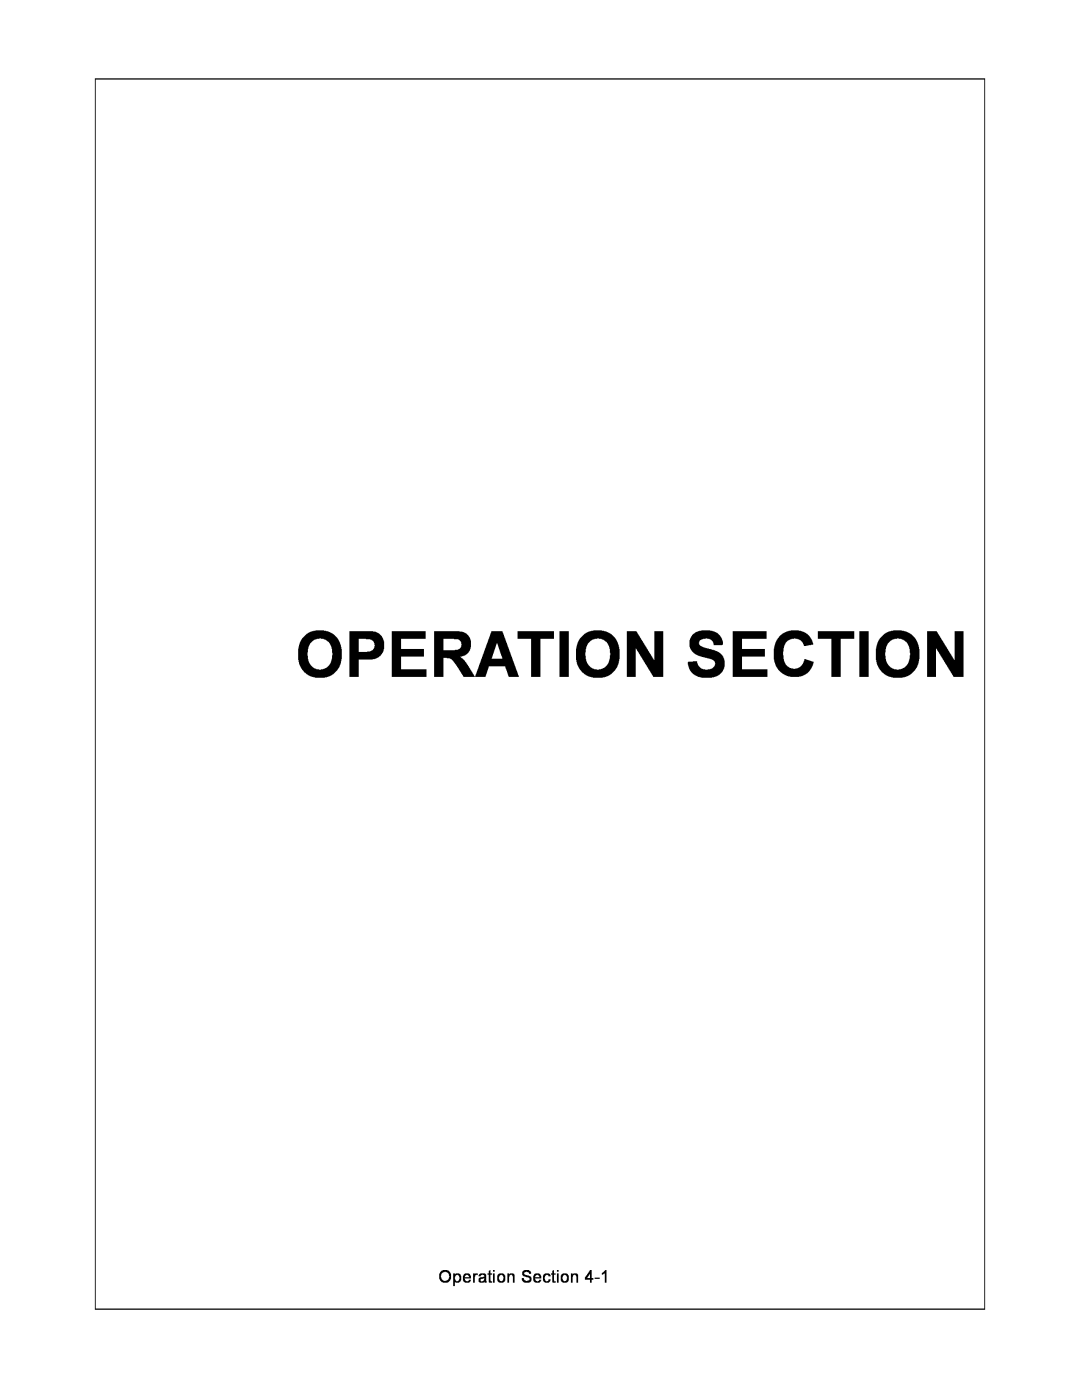 Alamo 800 manual Operation Section 